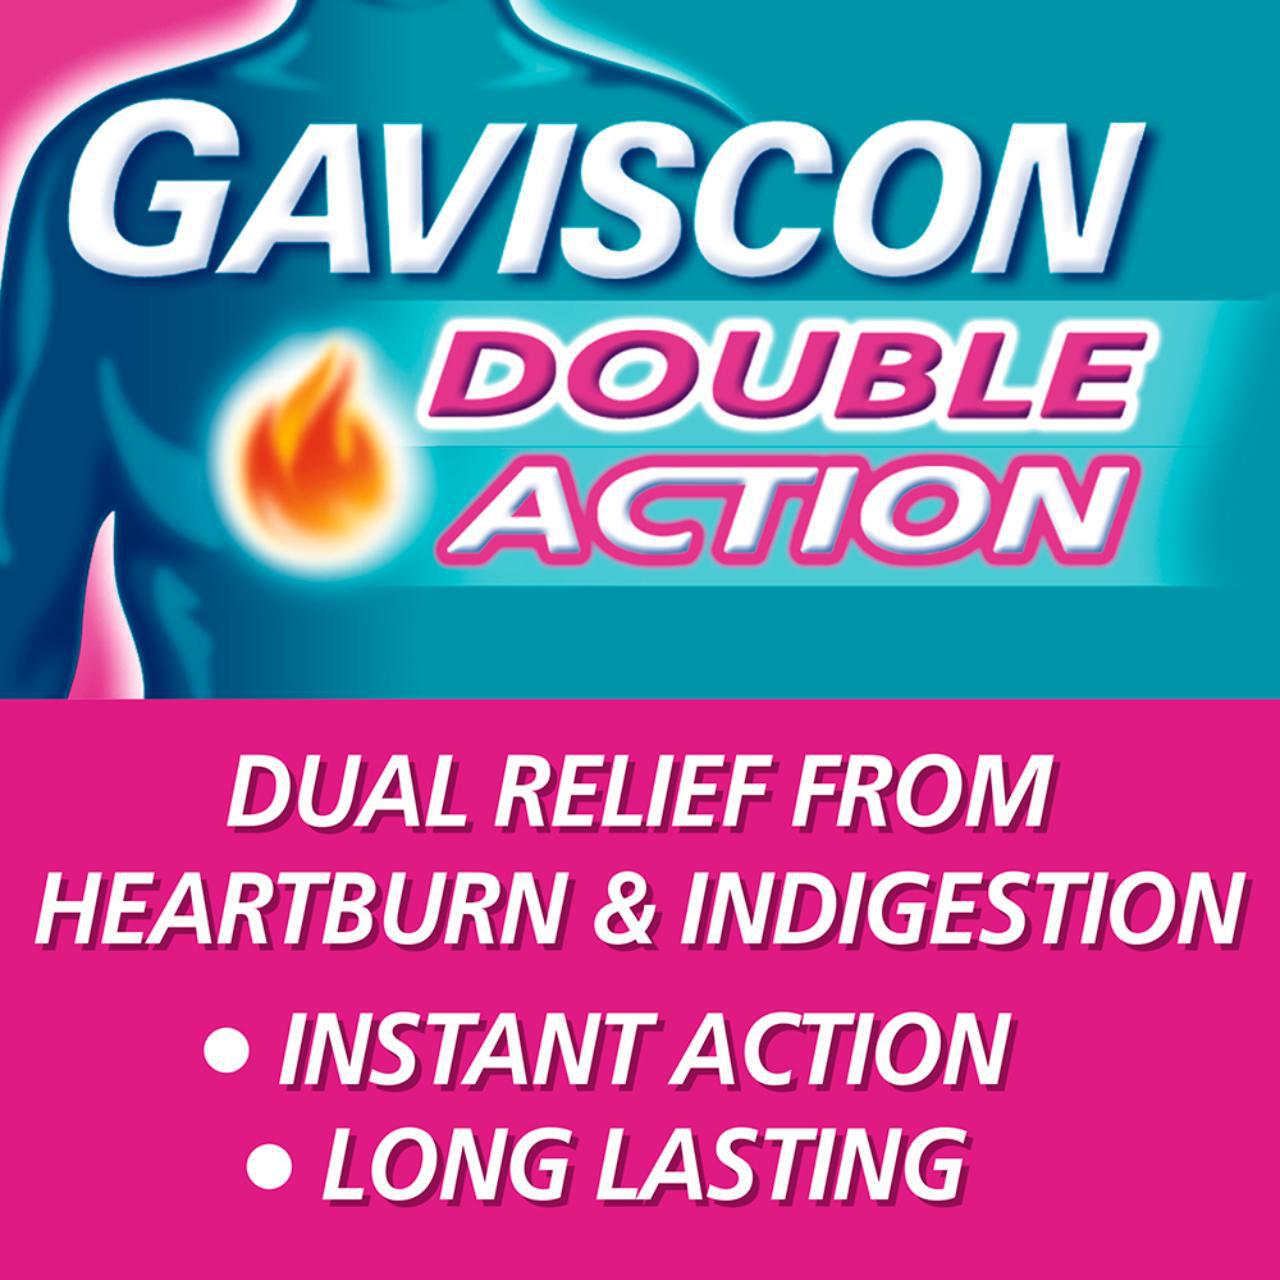 Gaviscon Double Action Heartburn & Indigestion Mint Flavour Tablets 48 per pack